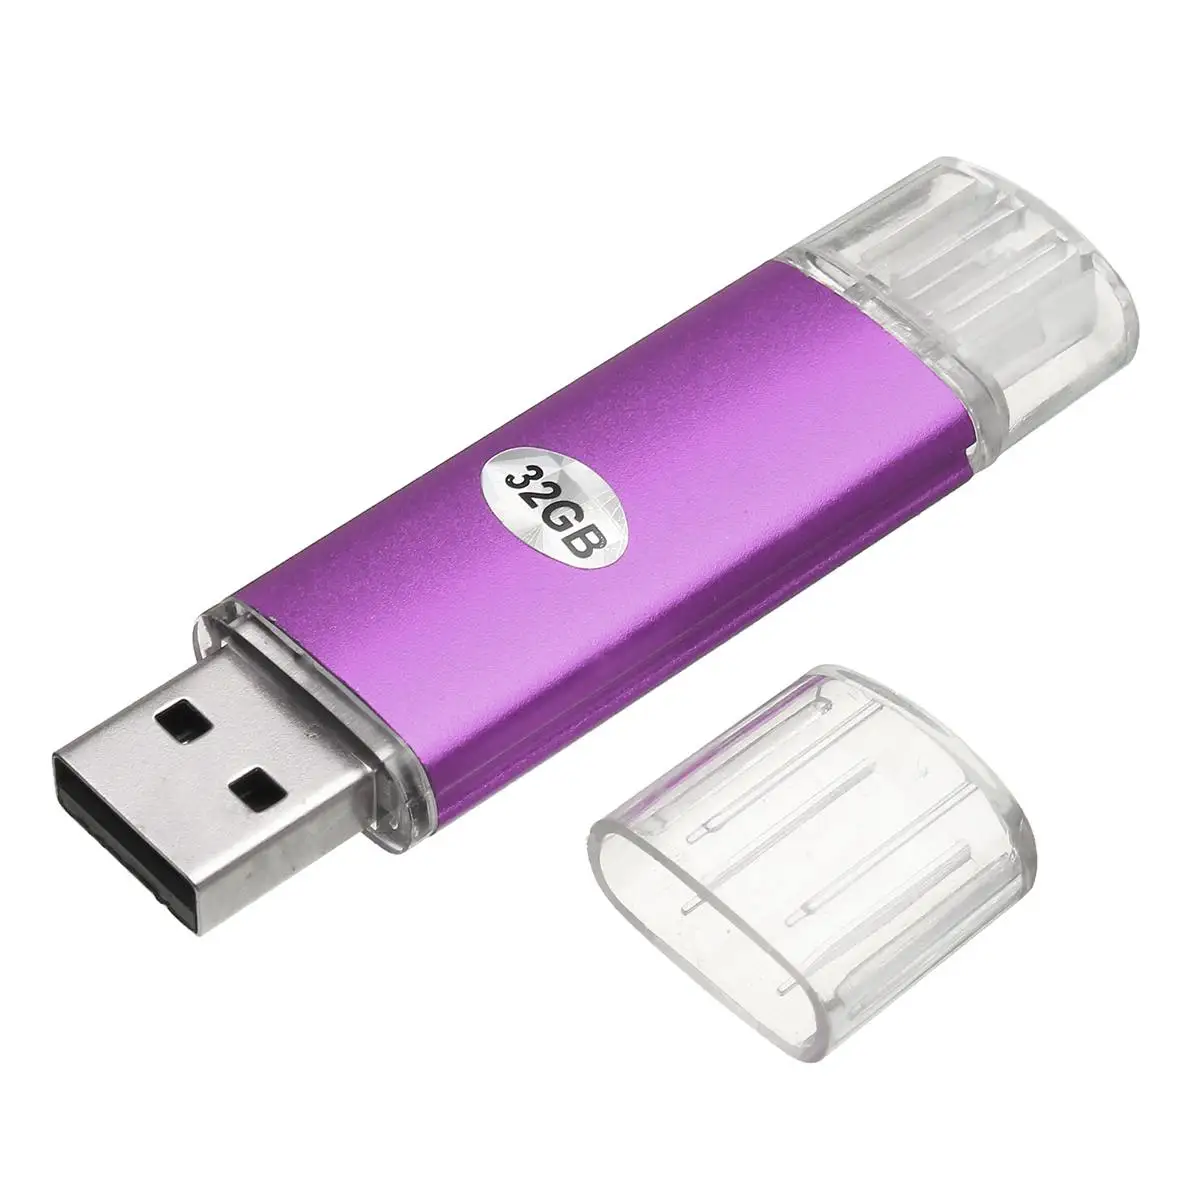 32 Гб 2 в 1 Micro флеш-диск USB 2,0 памяти Micro usb-накопитель OTG функция для смартфона и компьютера